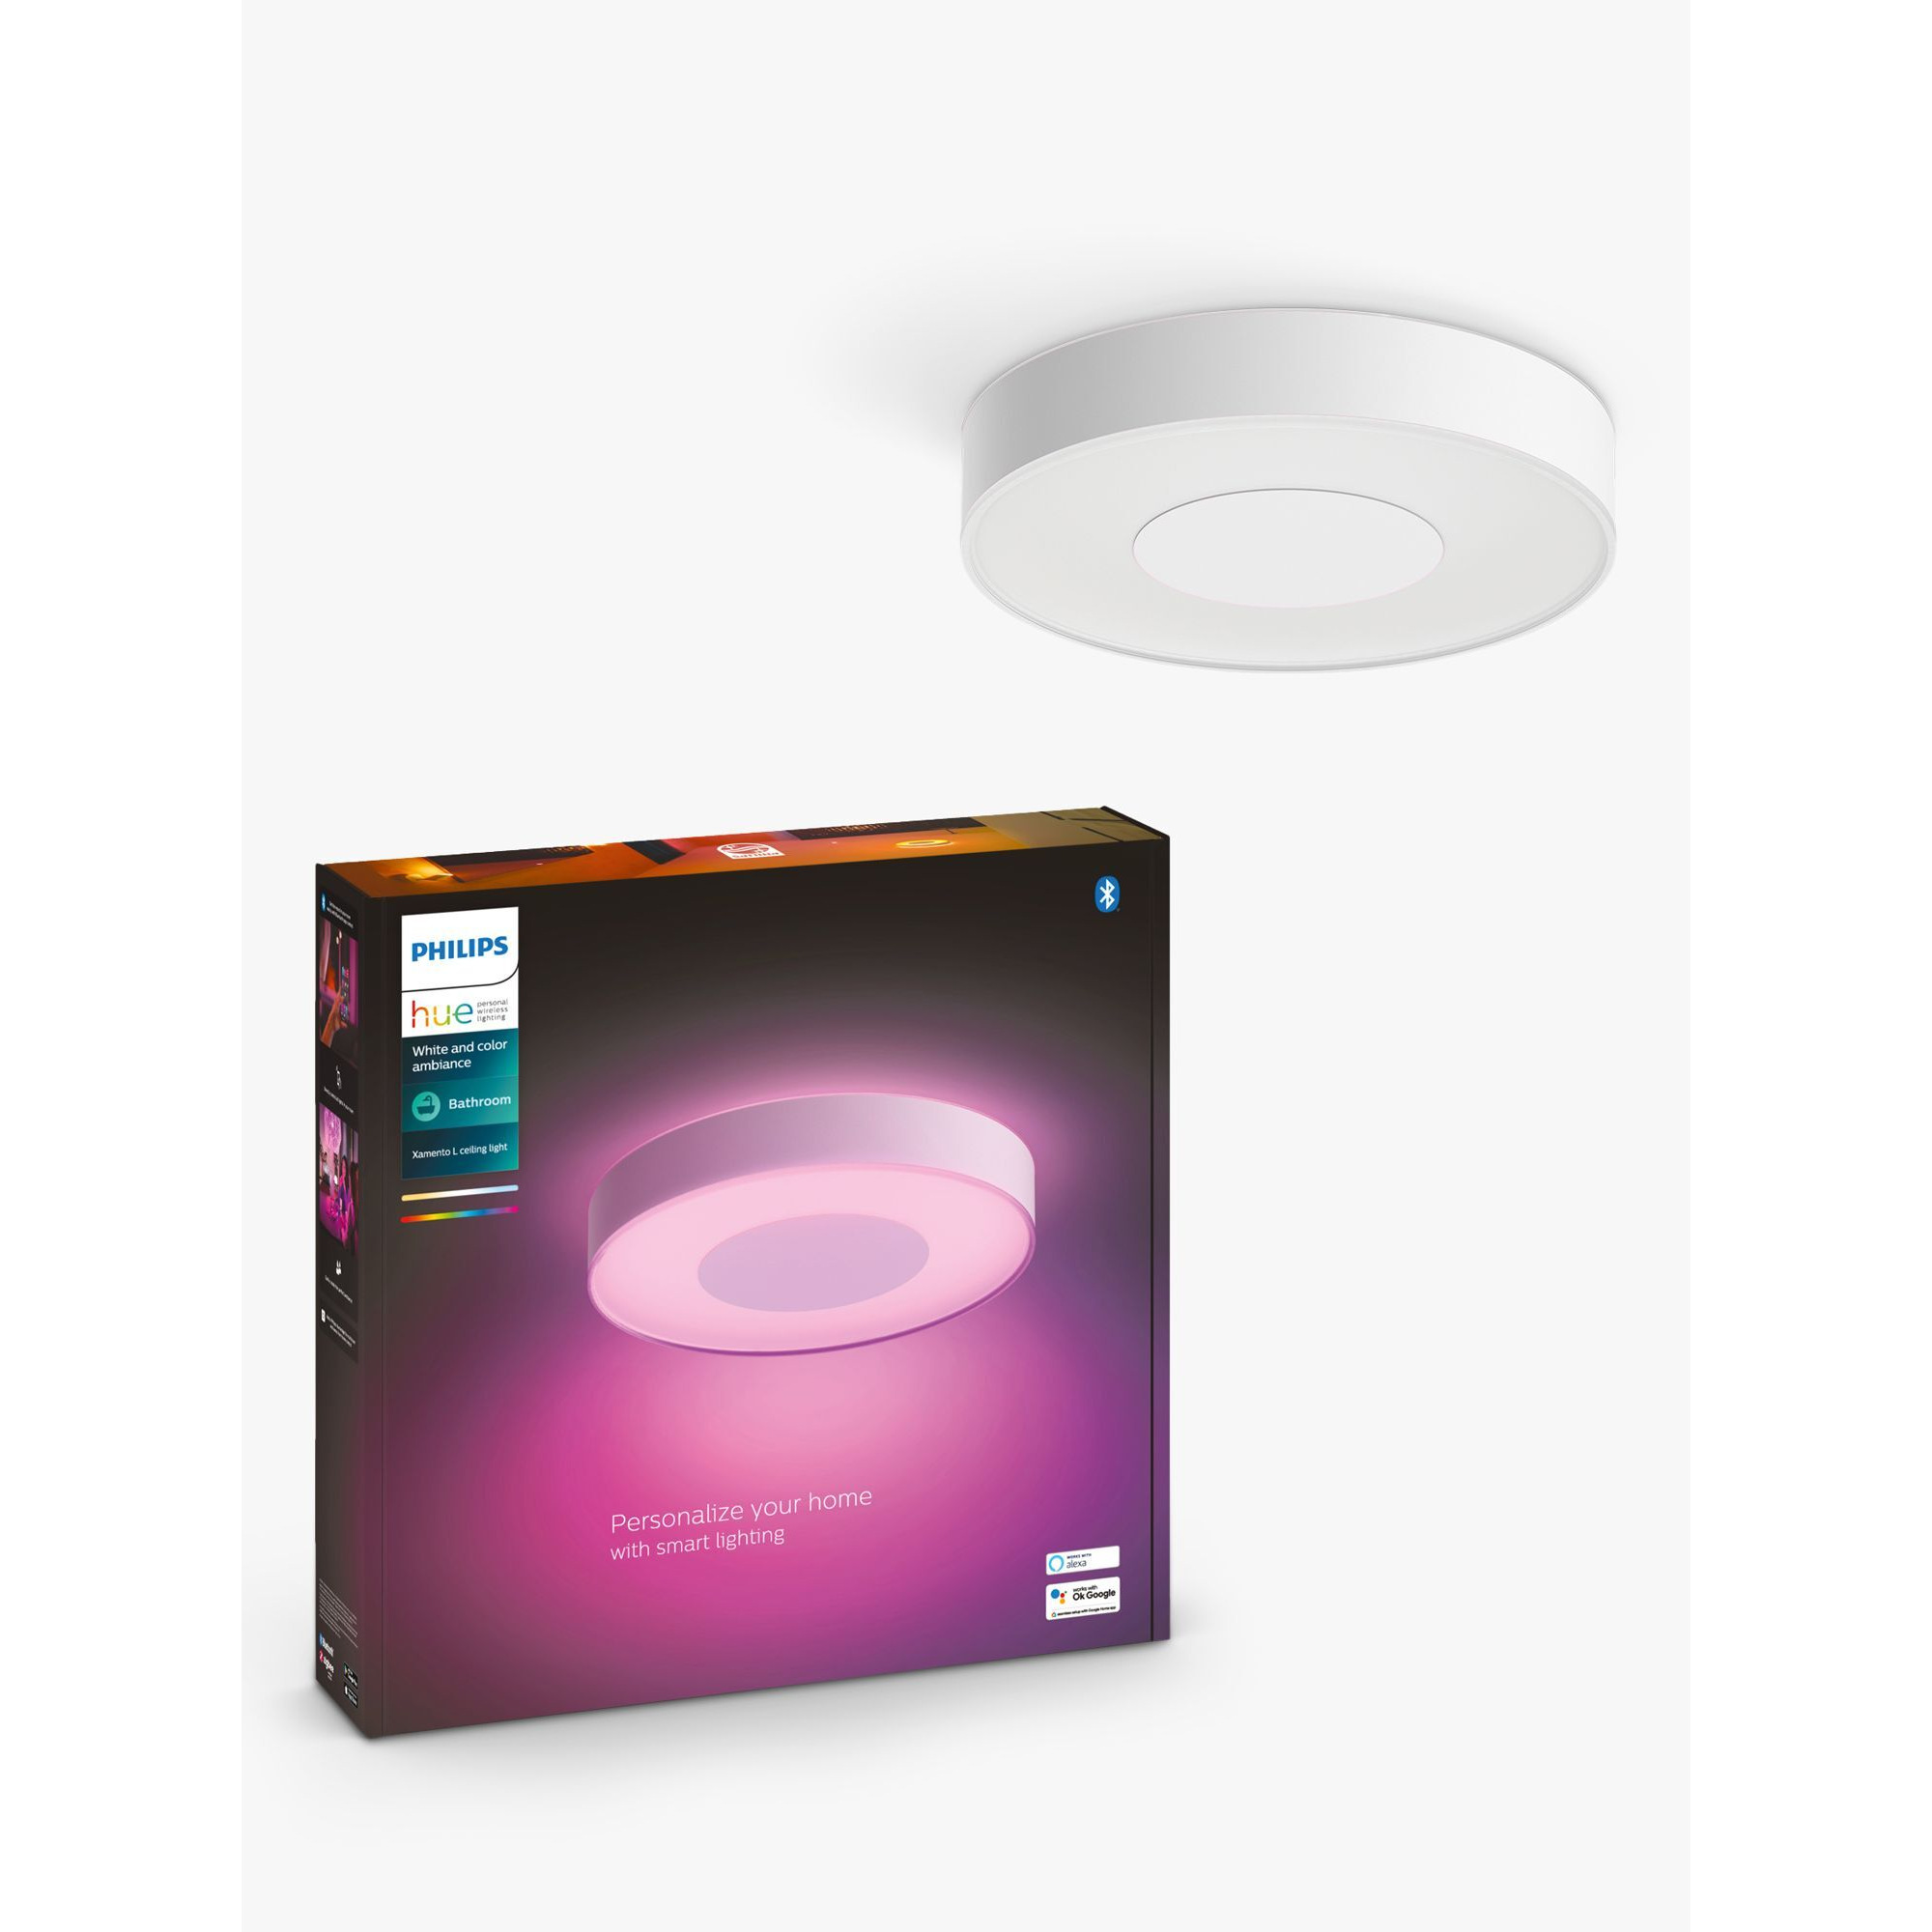 Philips Hue White and Colour Ambiance Xamento LED Smart Bathroom Ceiling Light, Large, White - image 1